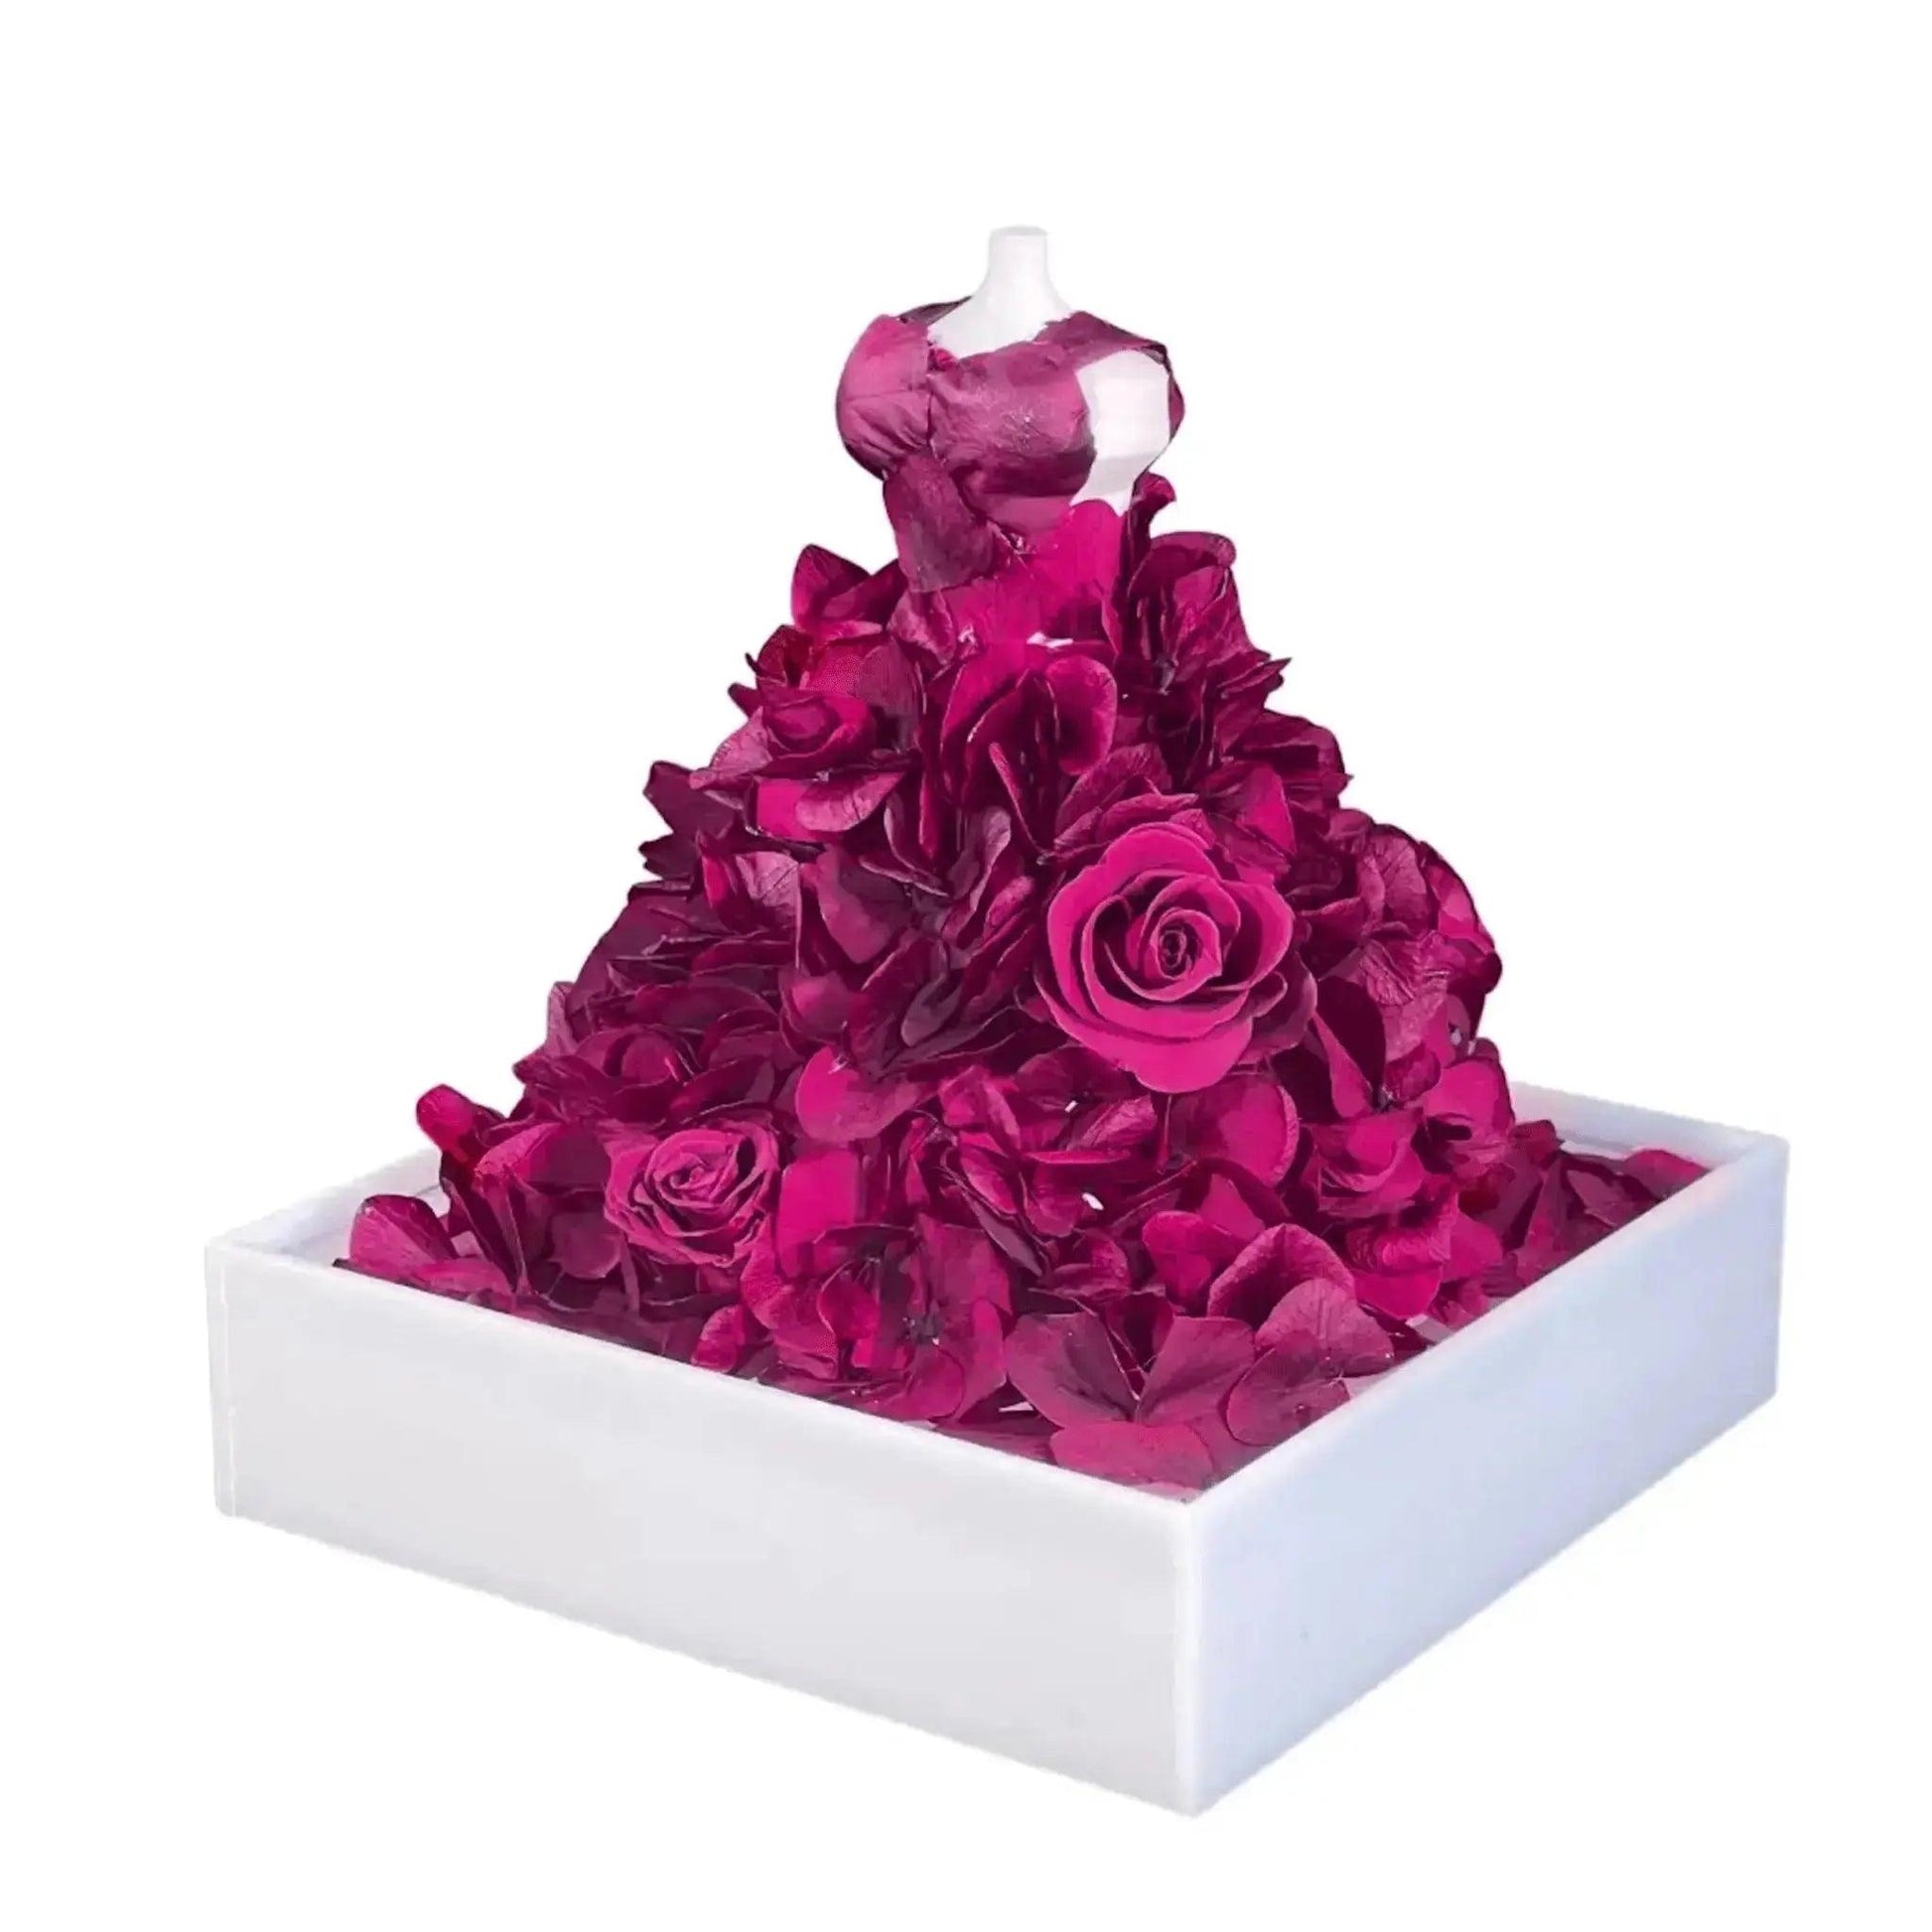 Hydrangea Elegance: Miniature Red Floral Dress - Imaginary Worlds